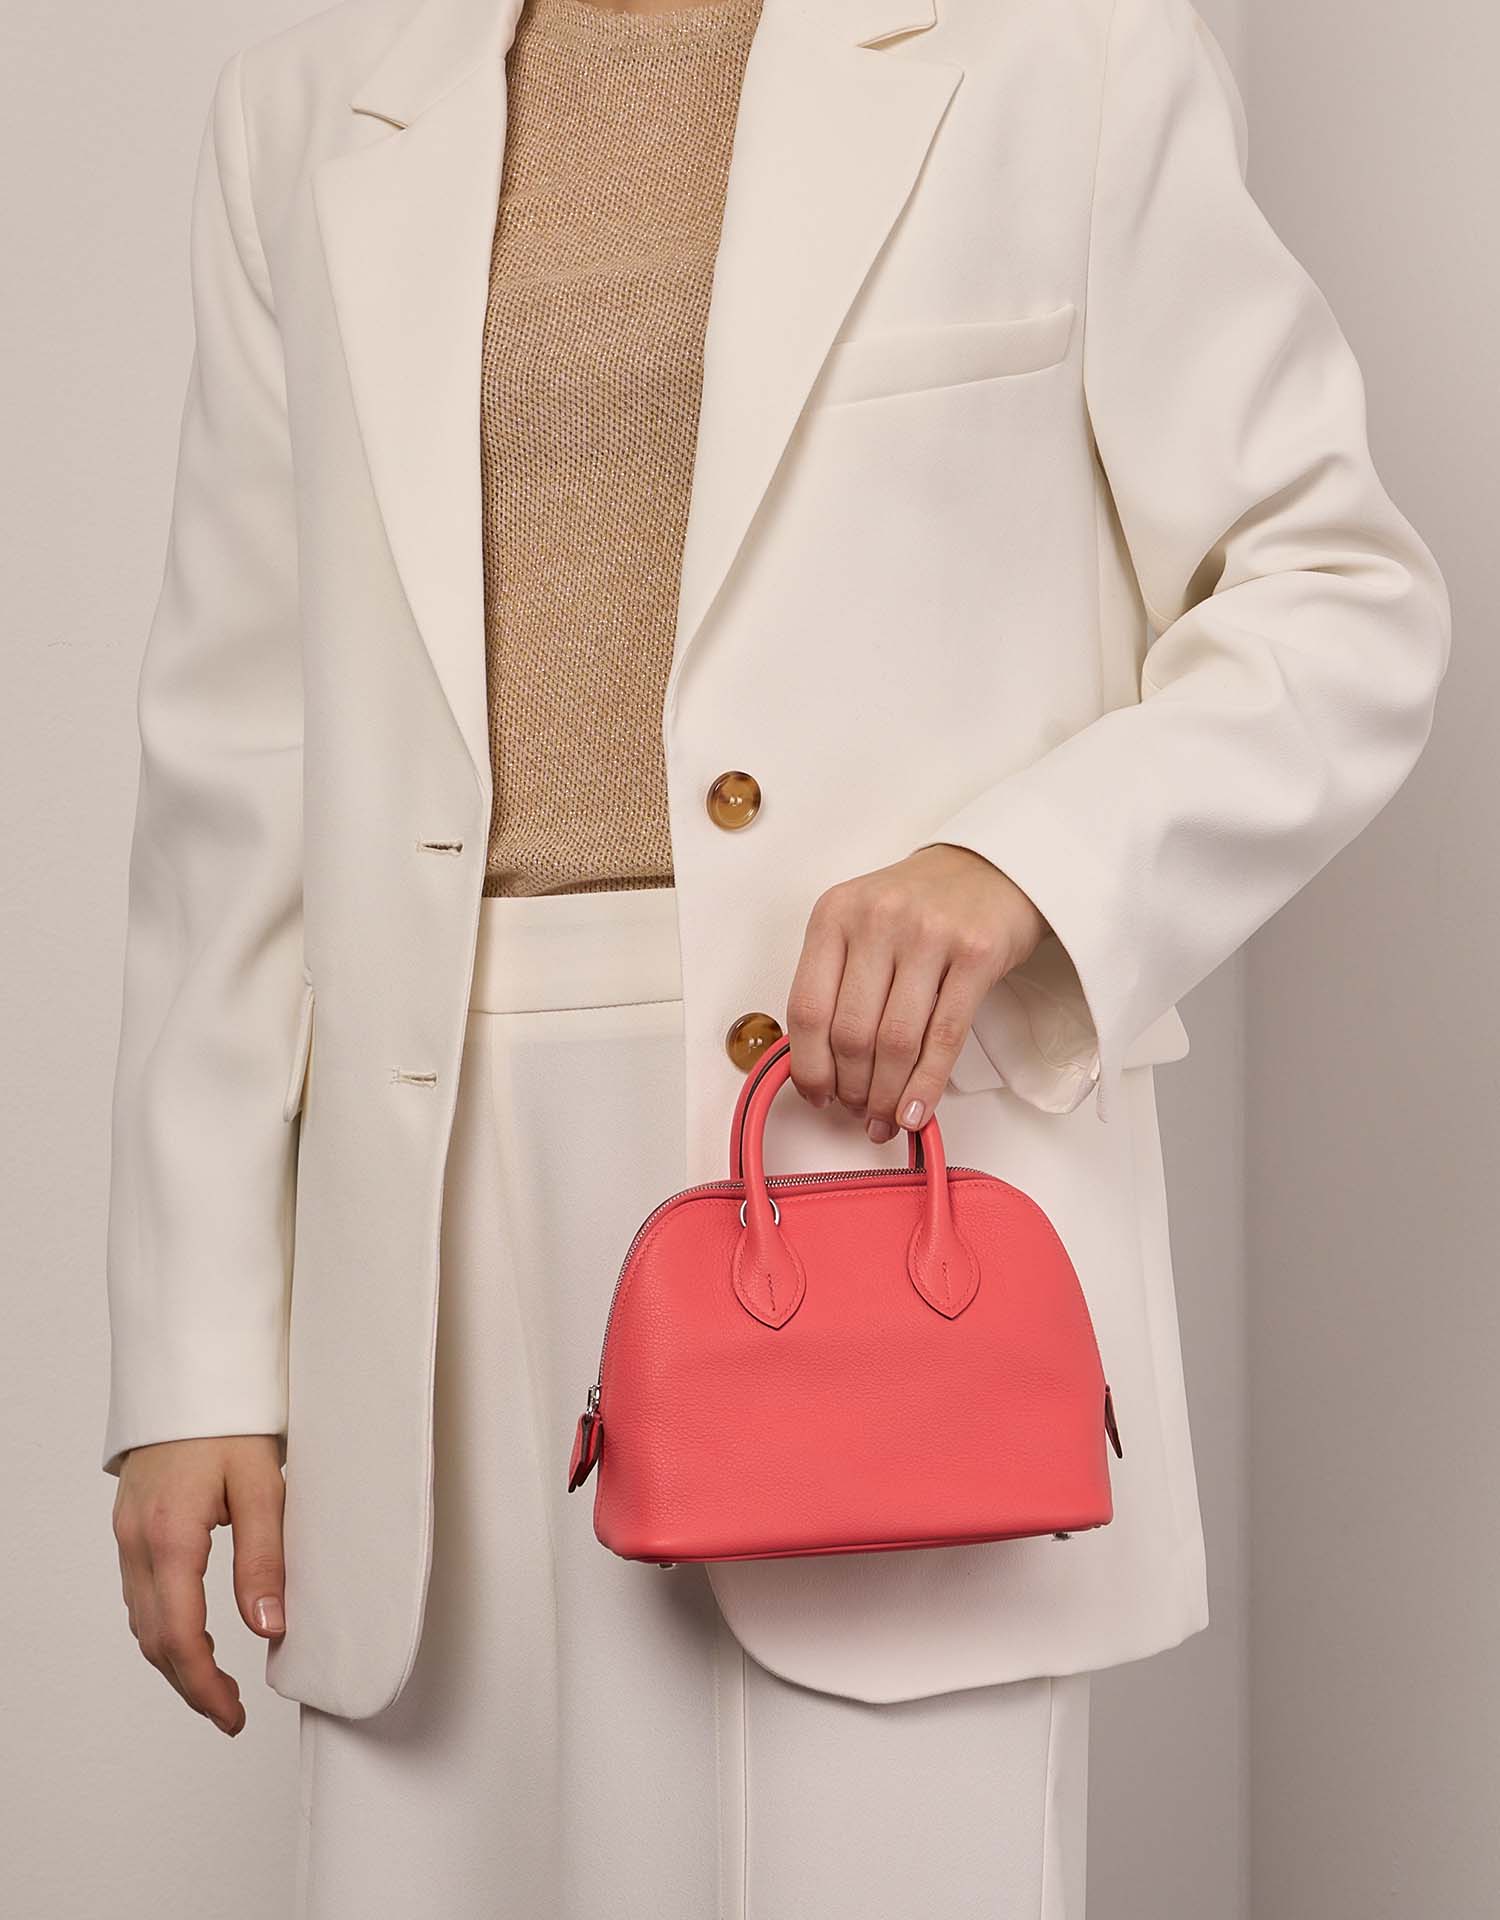 Hermès Bolide 20Mini RoseTexas Sizes Worn | Sell your designer bag on Saclab.com